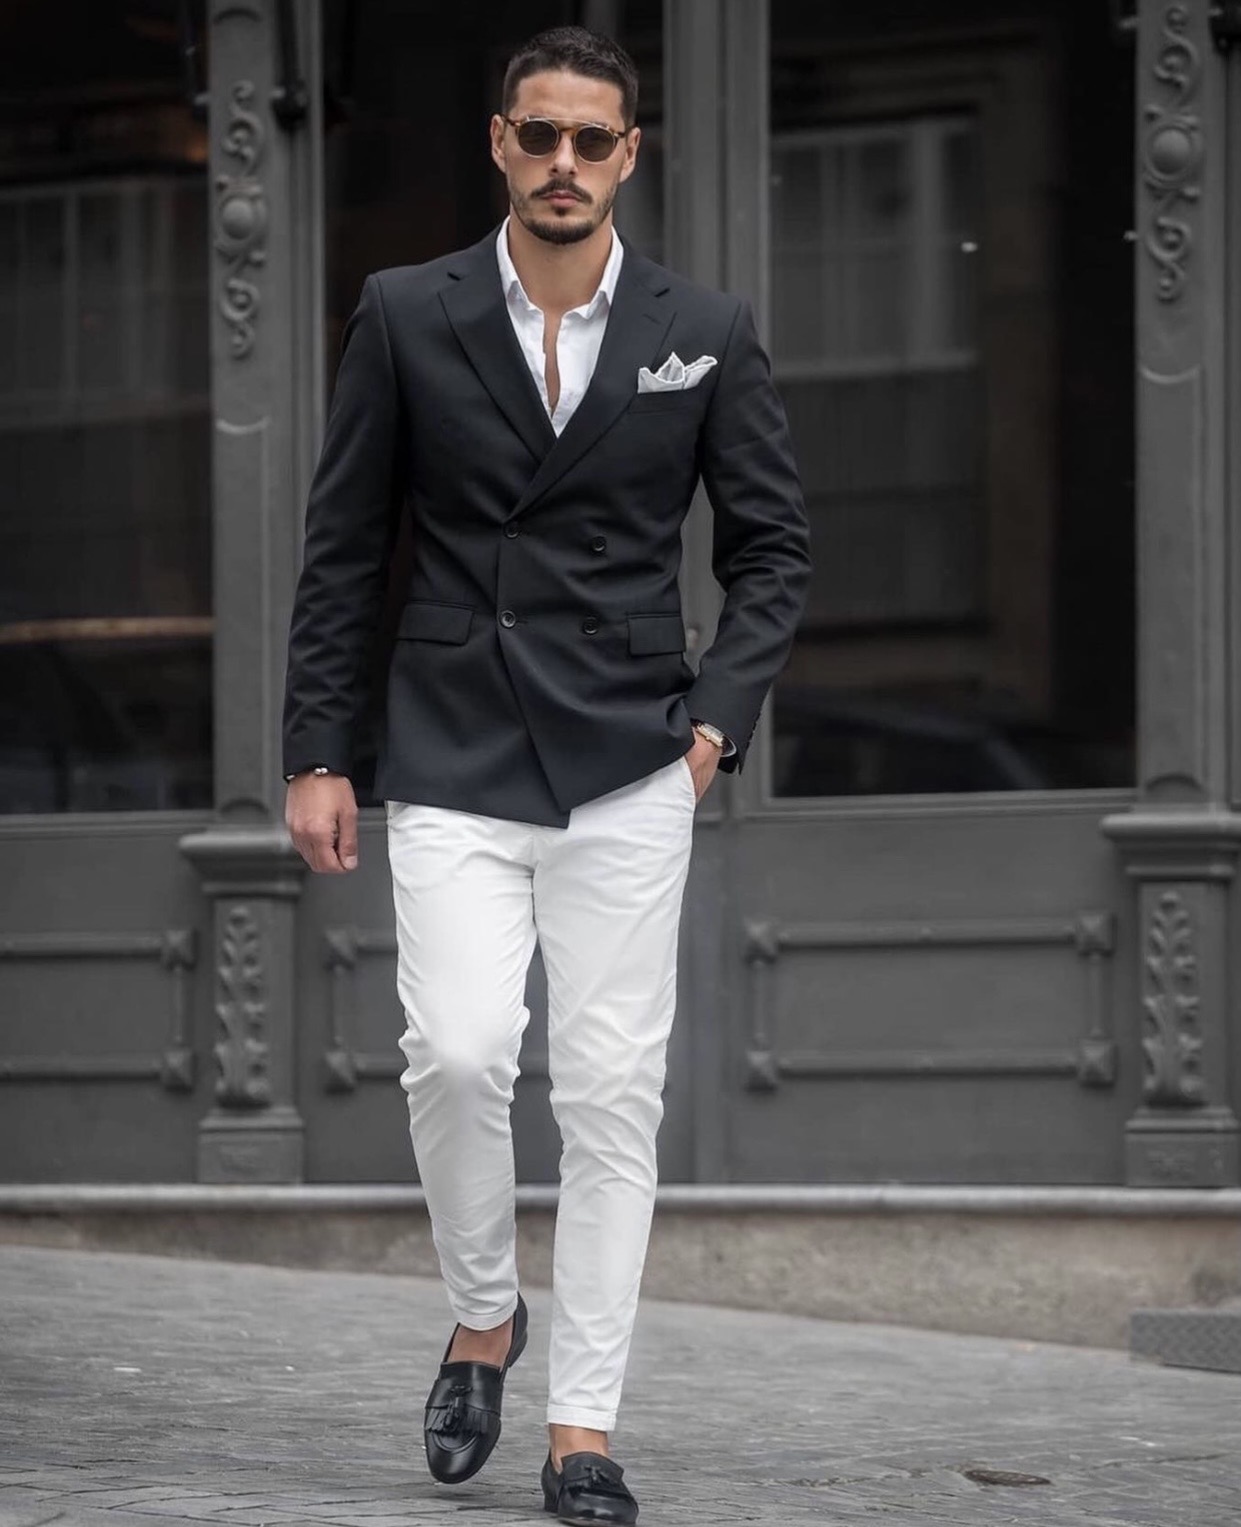 Classy mismatched Men’s fashion suit - Slaylebrity